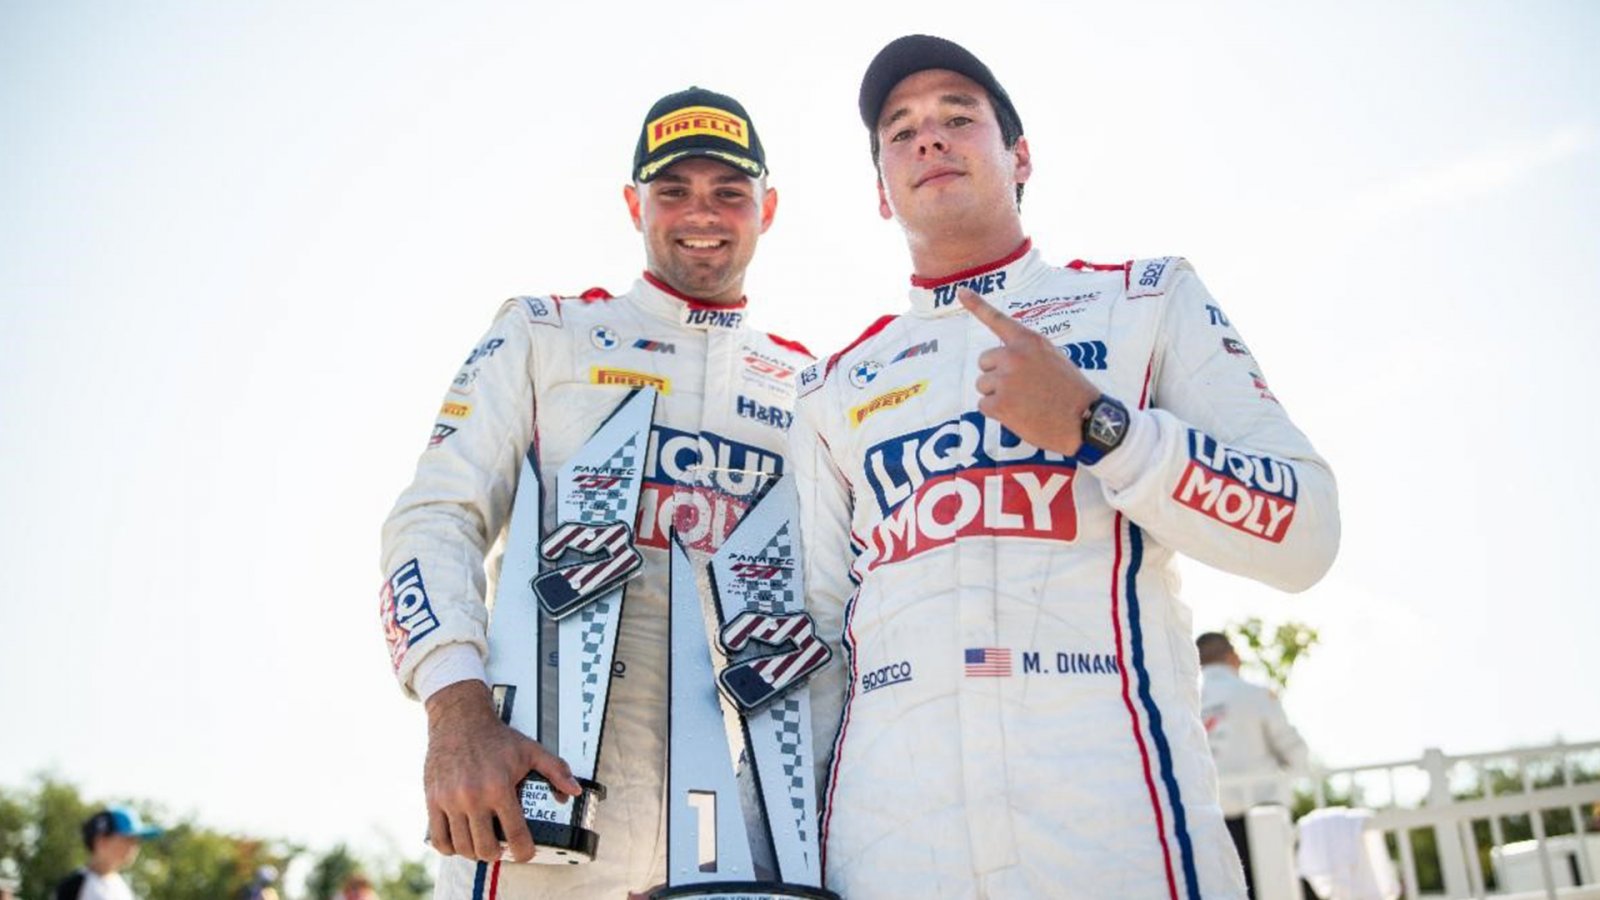 Turner Motorsport Drivers Dinan and Foley Win at Road America